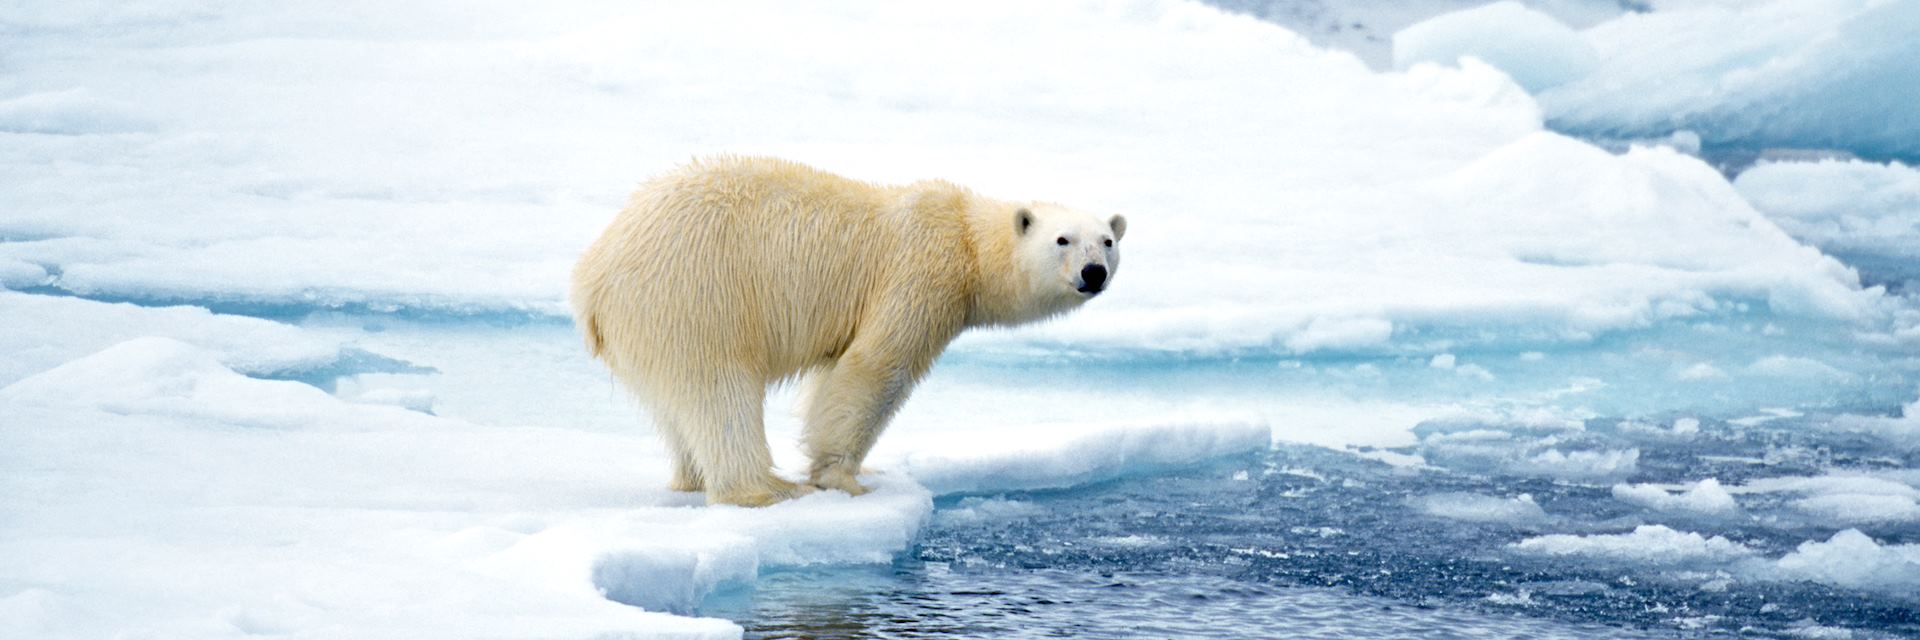 Polar bear in Arctic Canada